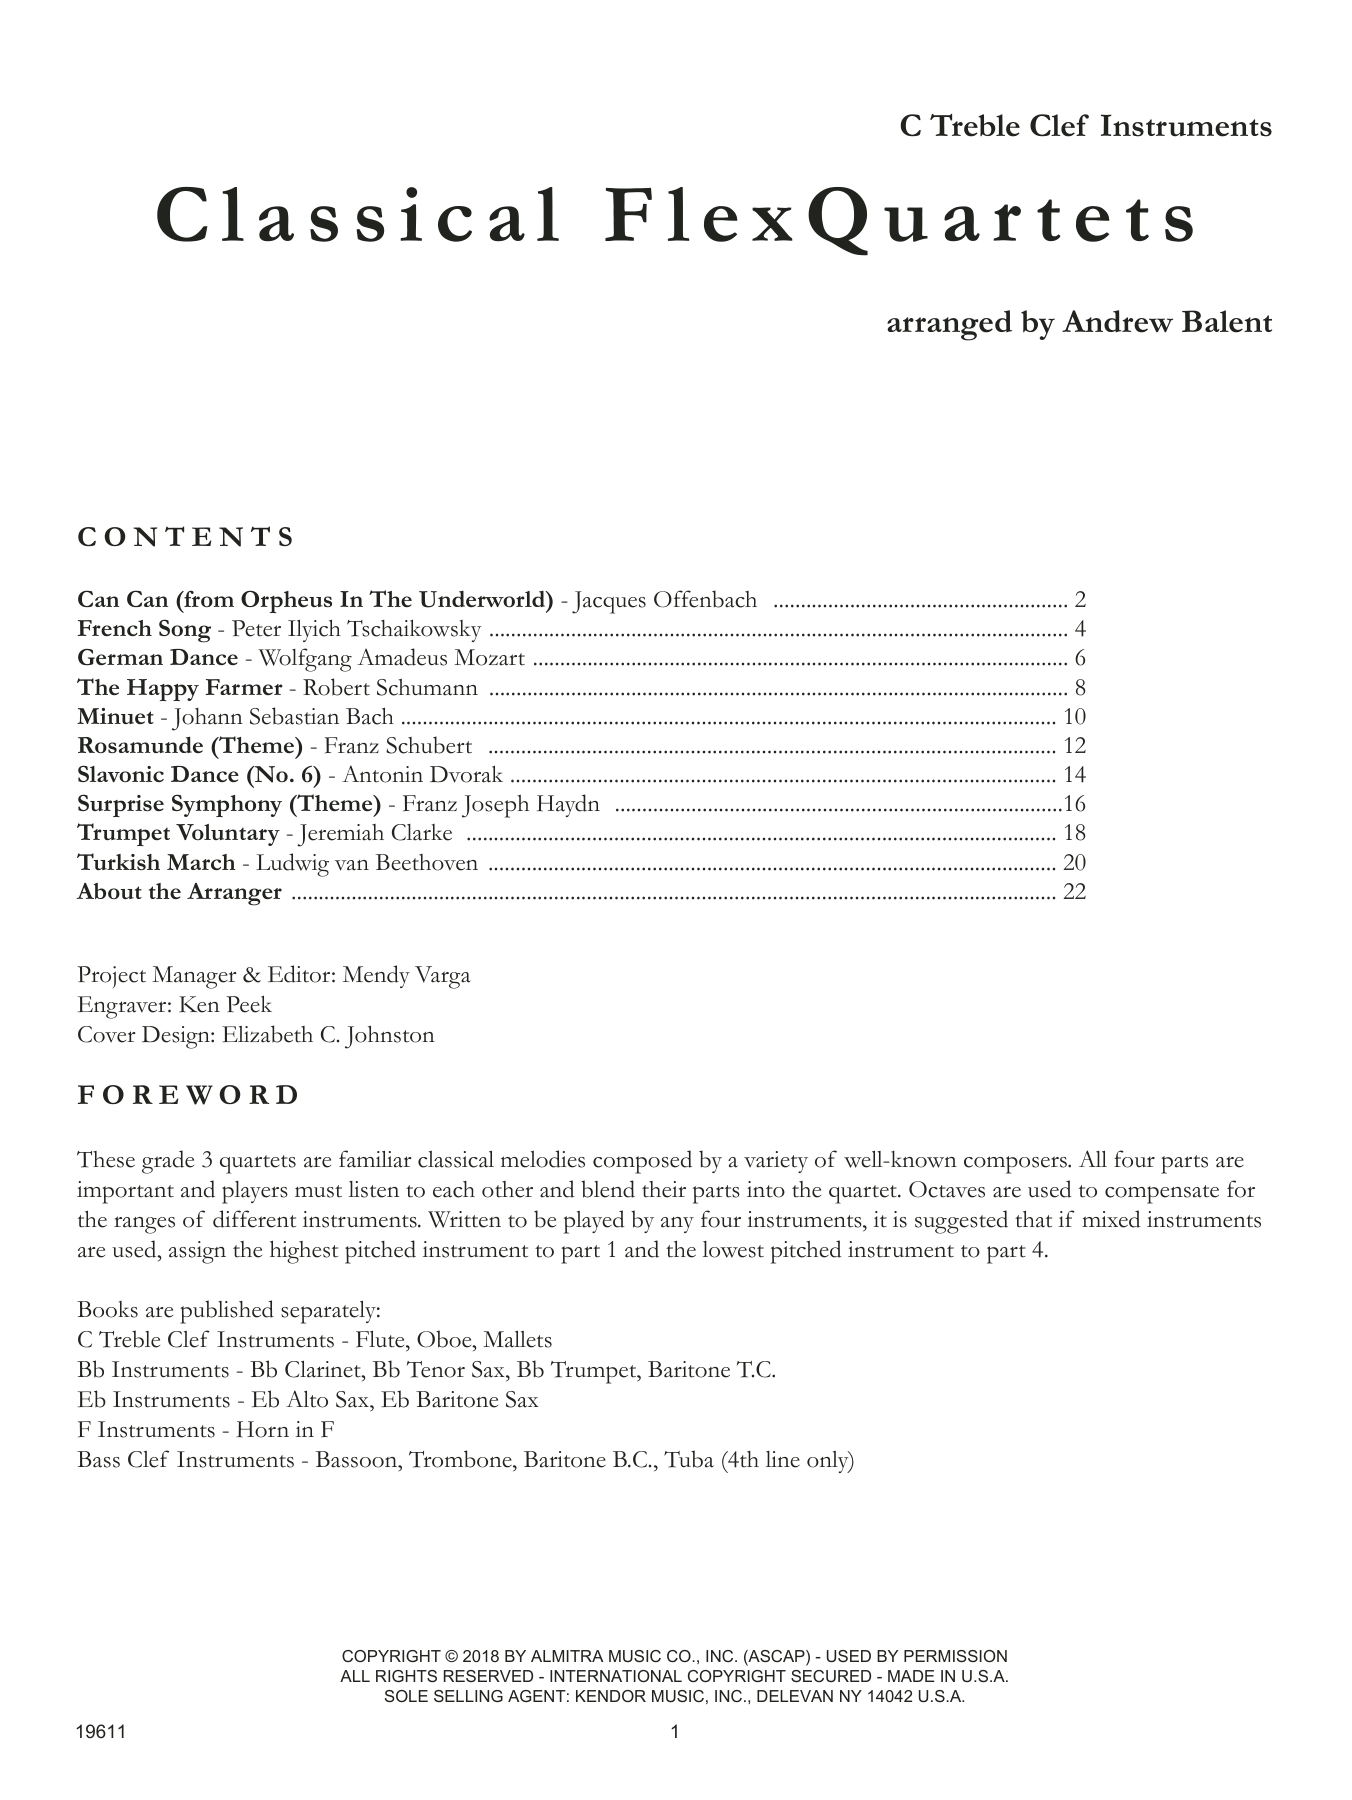 Download Andrew Balent Classical FlexQuartets - C Treble Clef Sheet Music